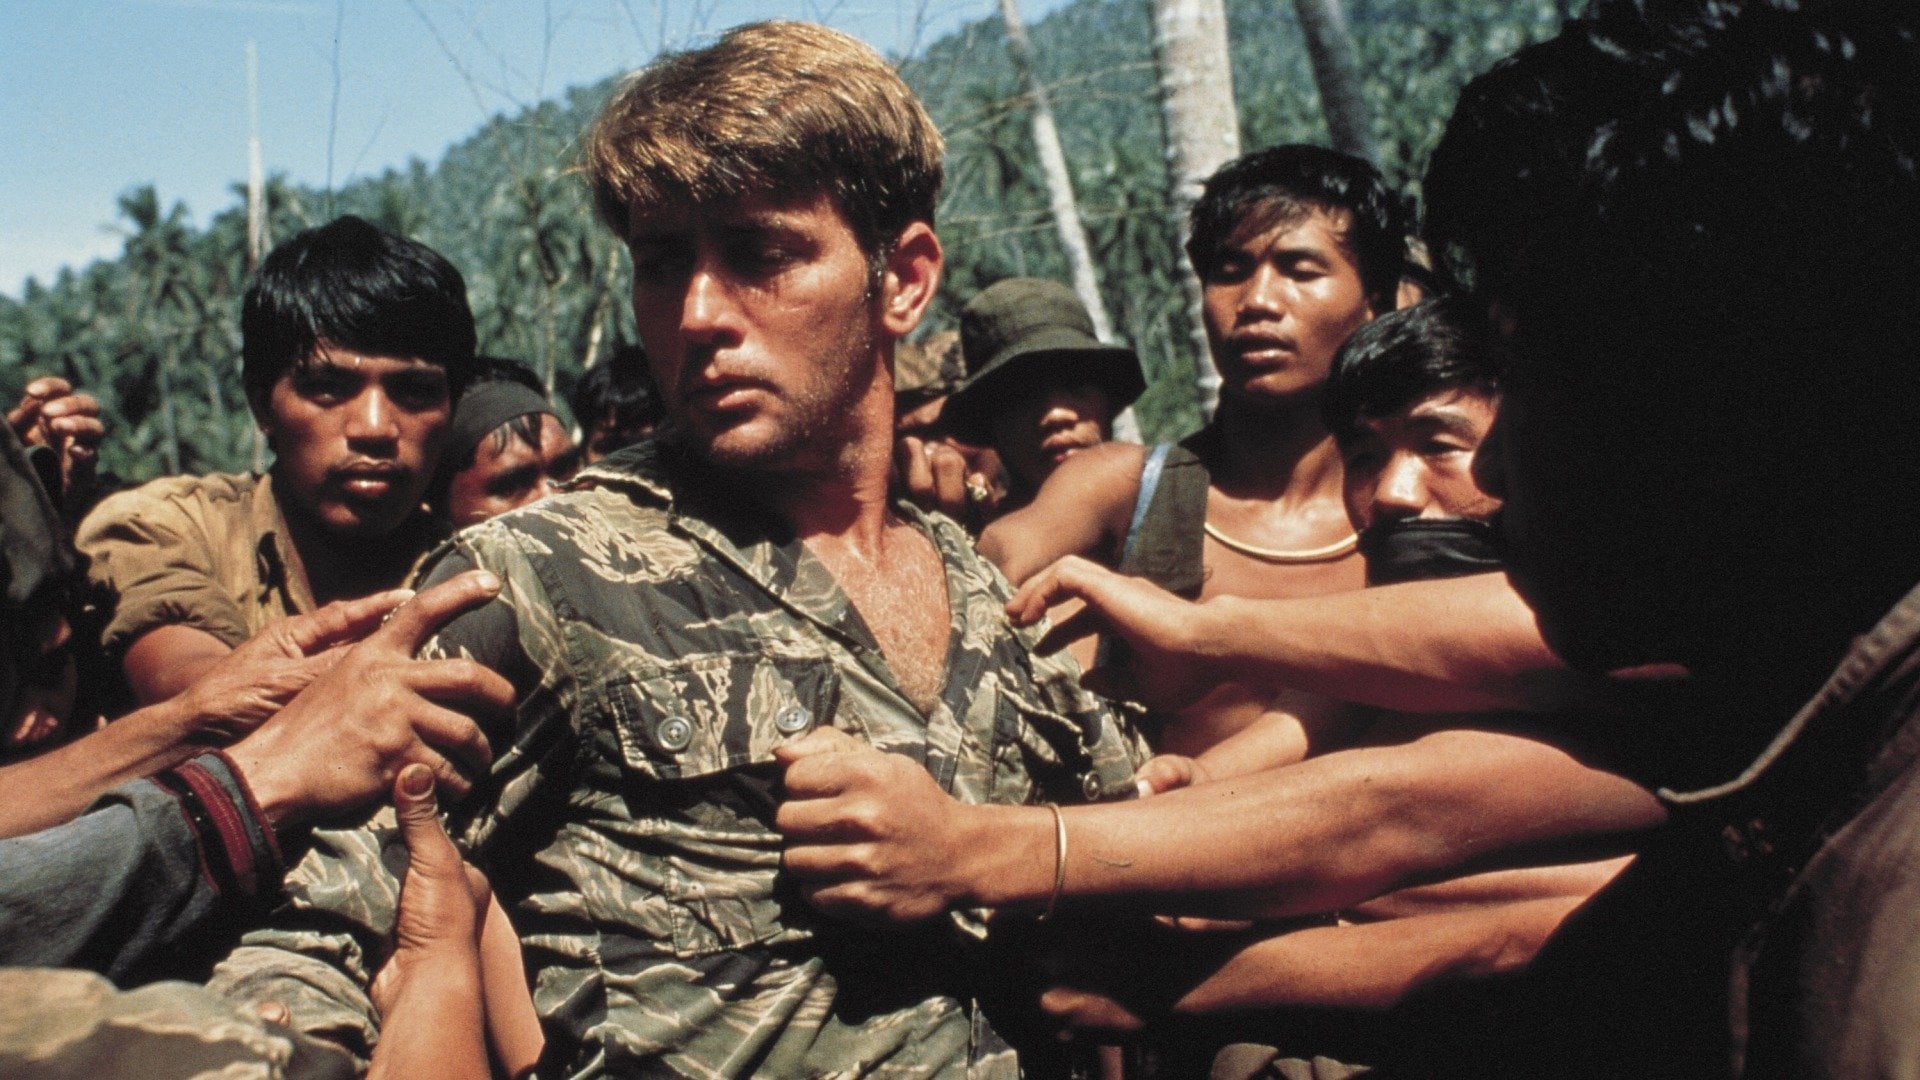 Image du film Apocalypse Now Final Cut irkkaeflxo44t6dthux3dhjfohvjpg